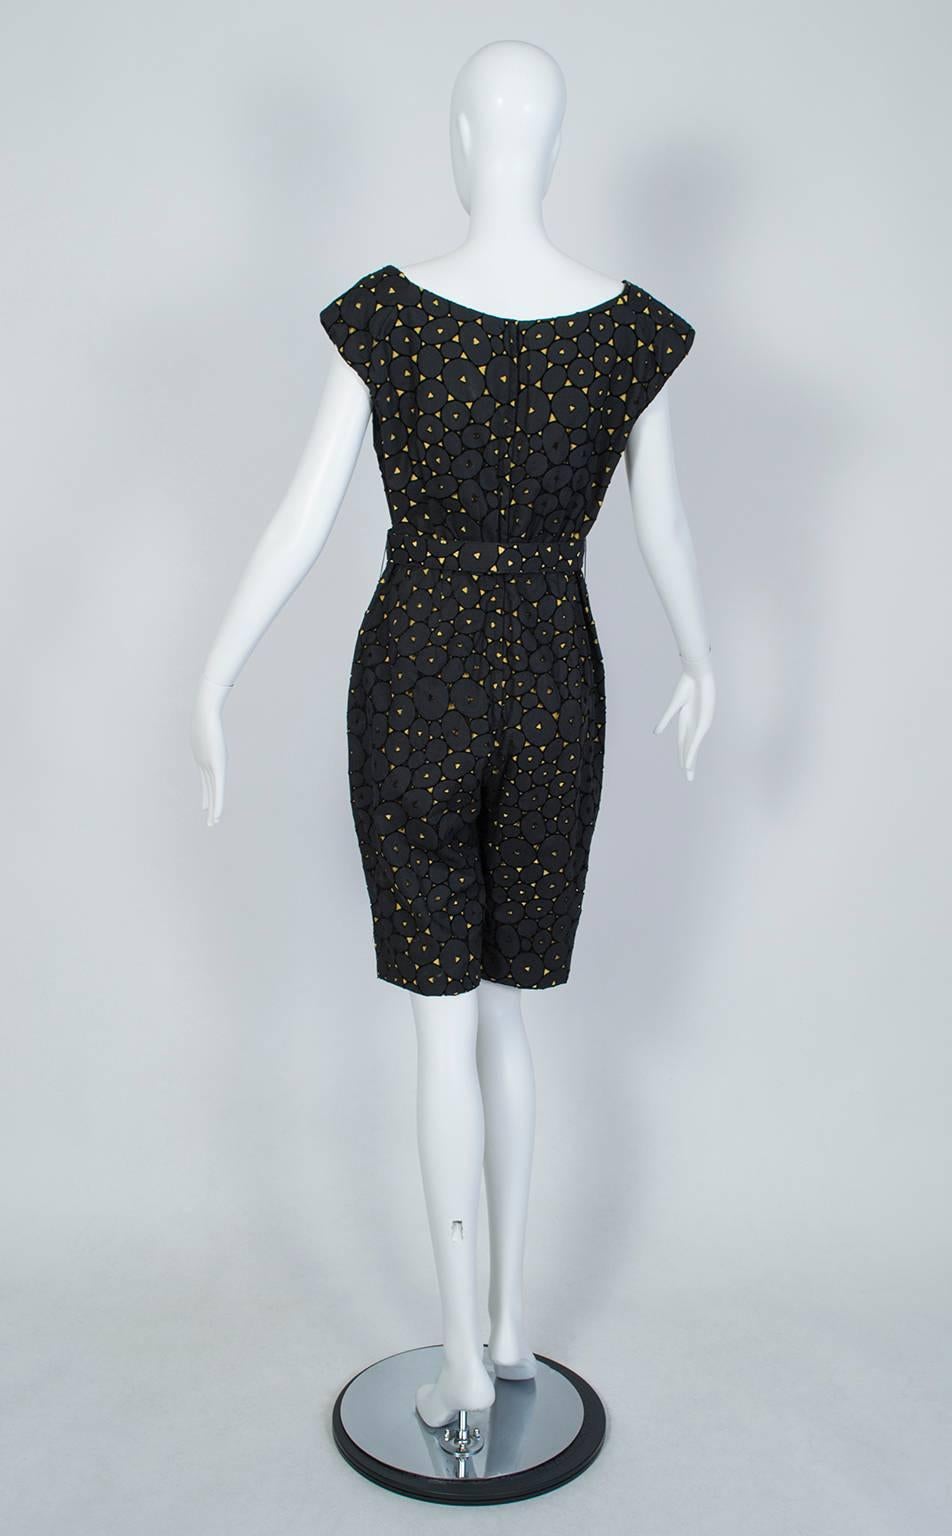 Black and Gold Eyelet Shorts Romper with Sheer Hostess Overskirt - Medium, 1950s 1